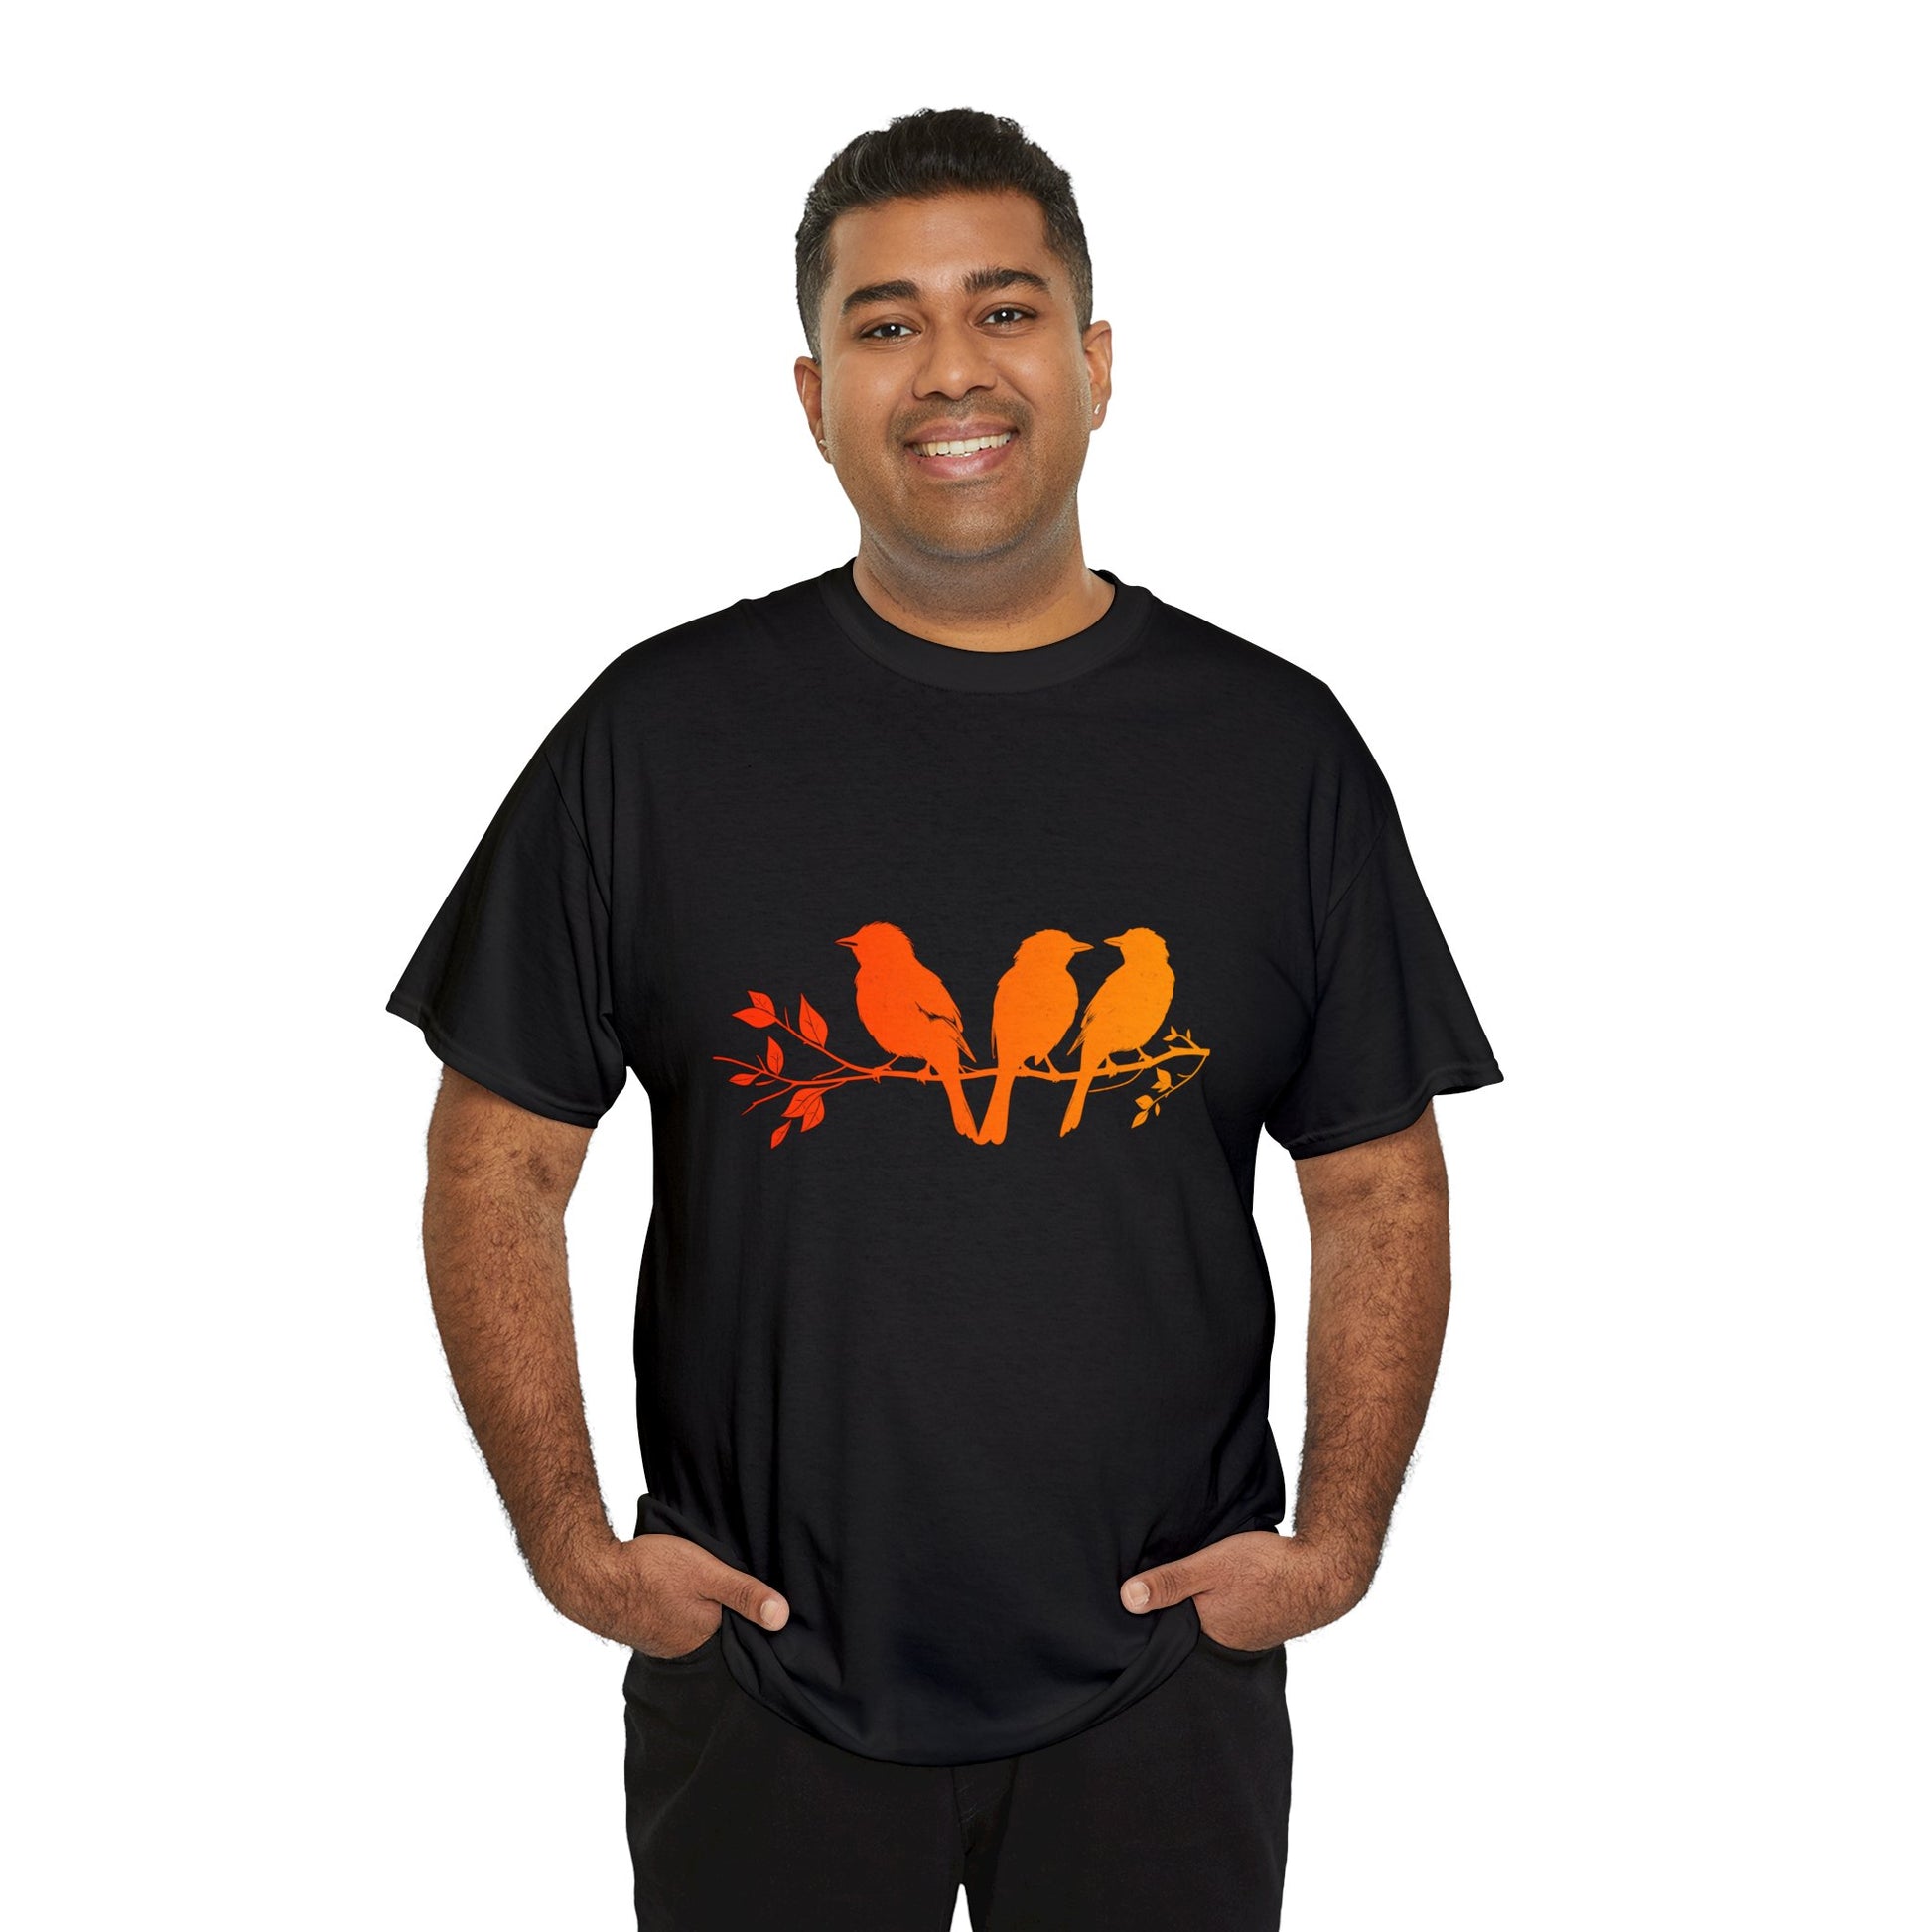 Unisex T-shirt Birds on a Branch in Orange - Frogos Design